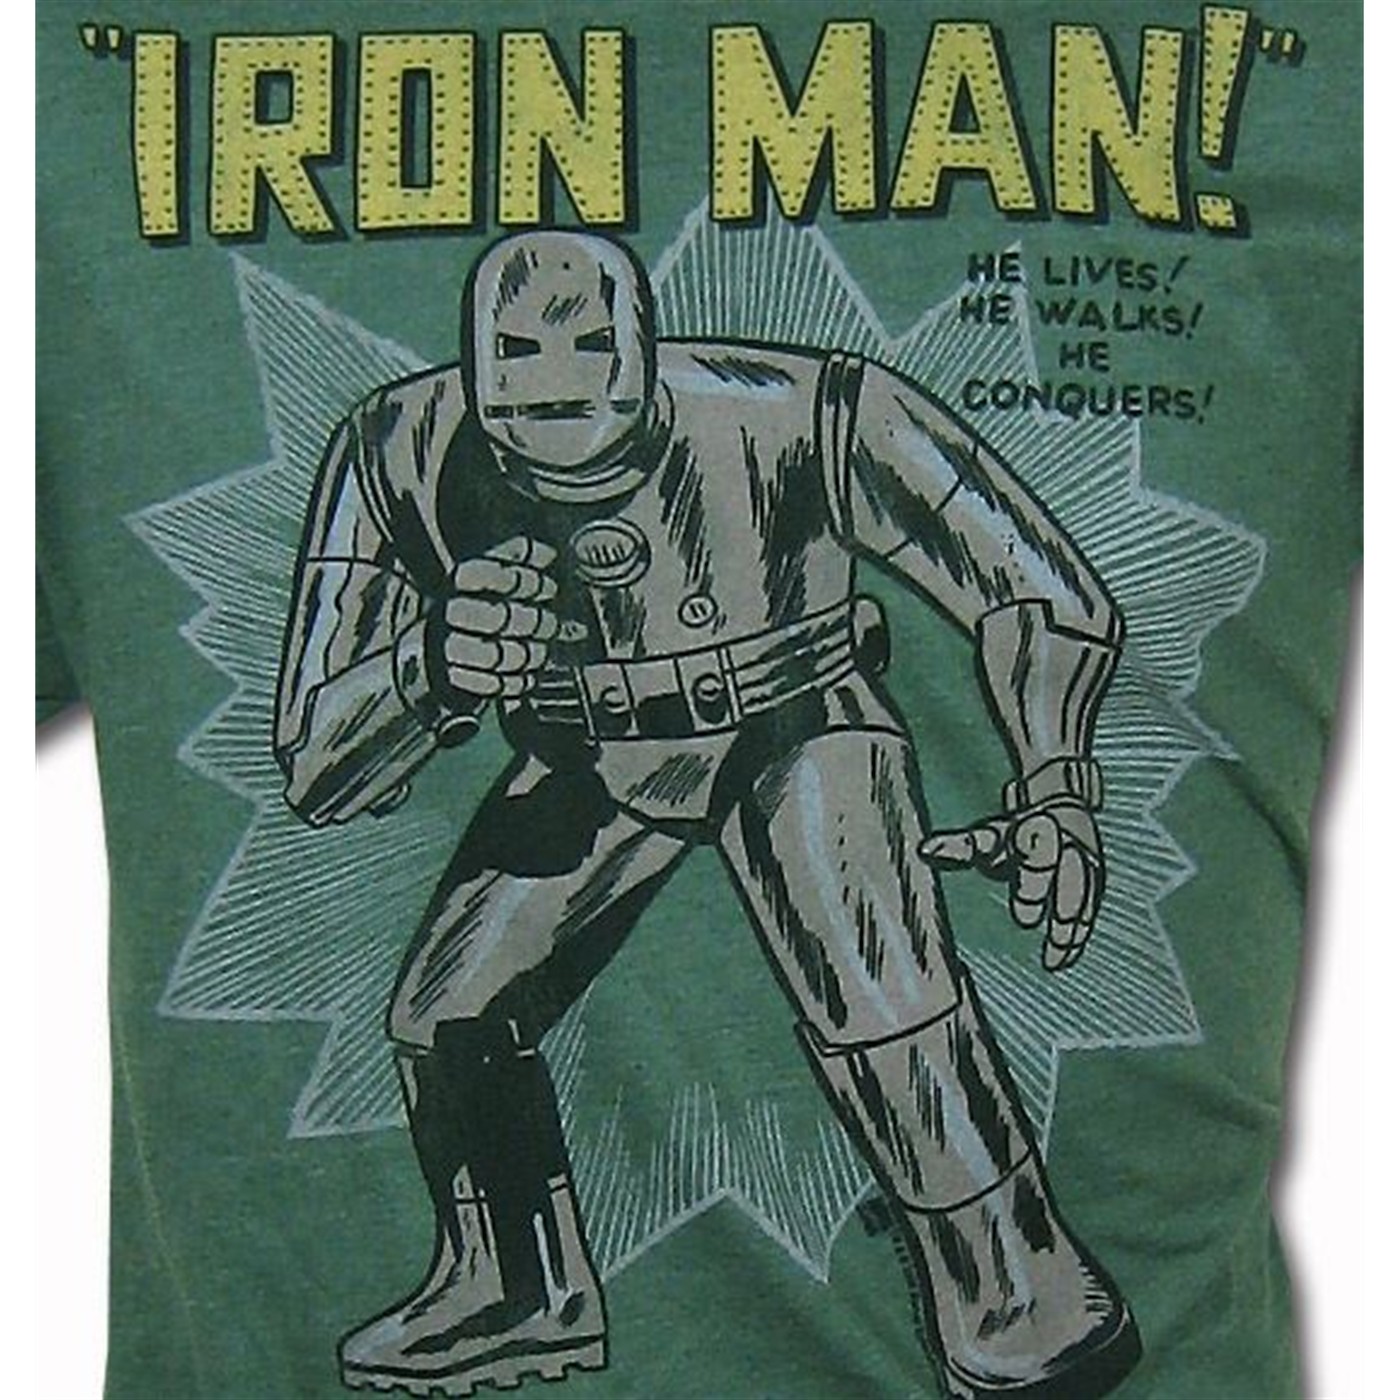 Iron Man Mark 1 Junk Food Green T-Shirt